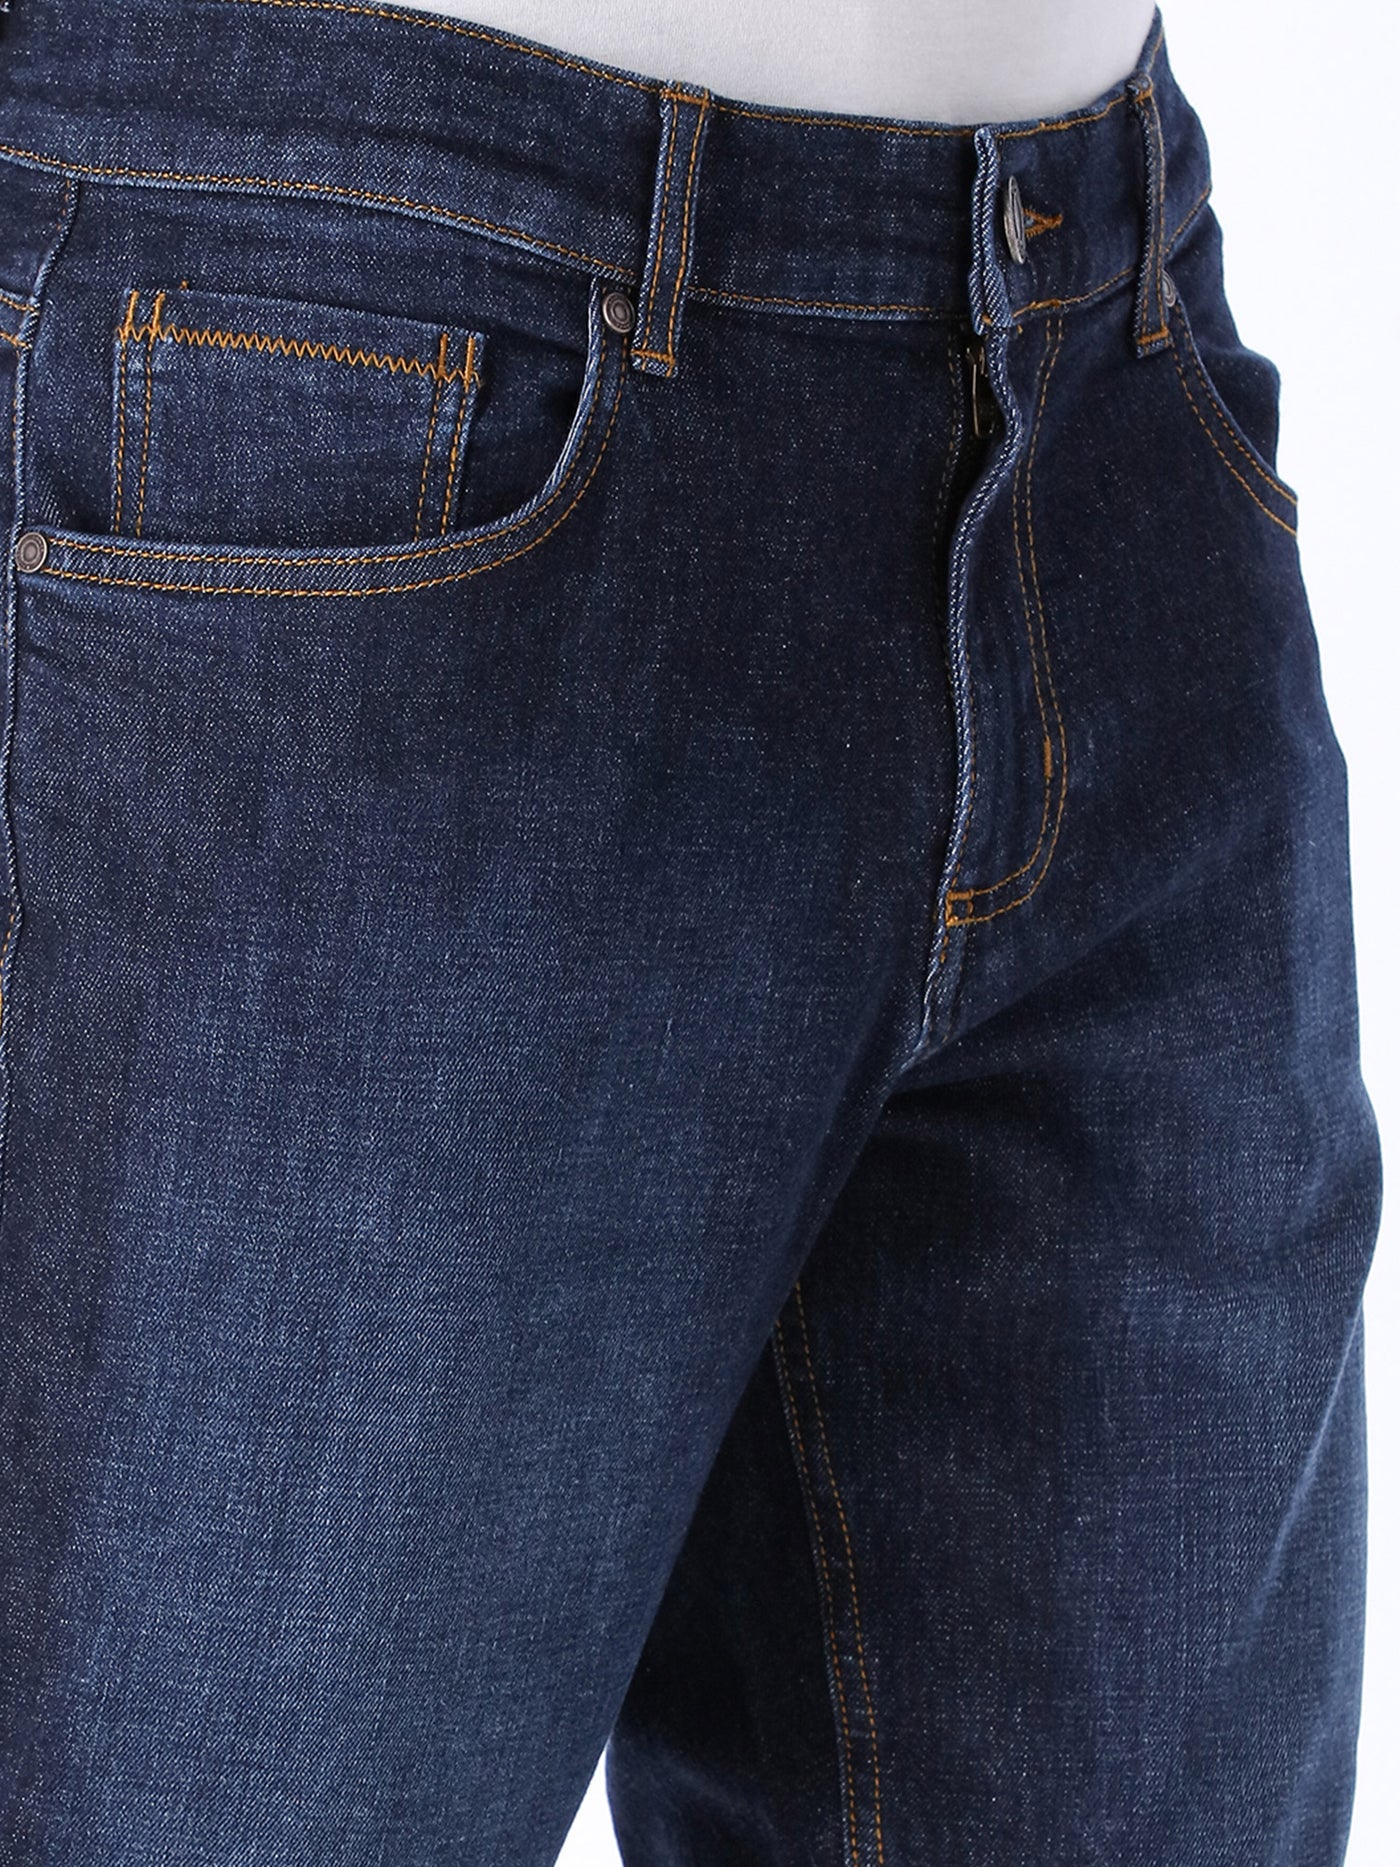 Daniel Hechter Men's Washed Effect Denim Pants